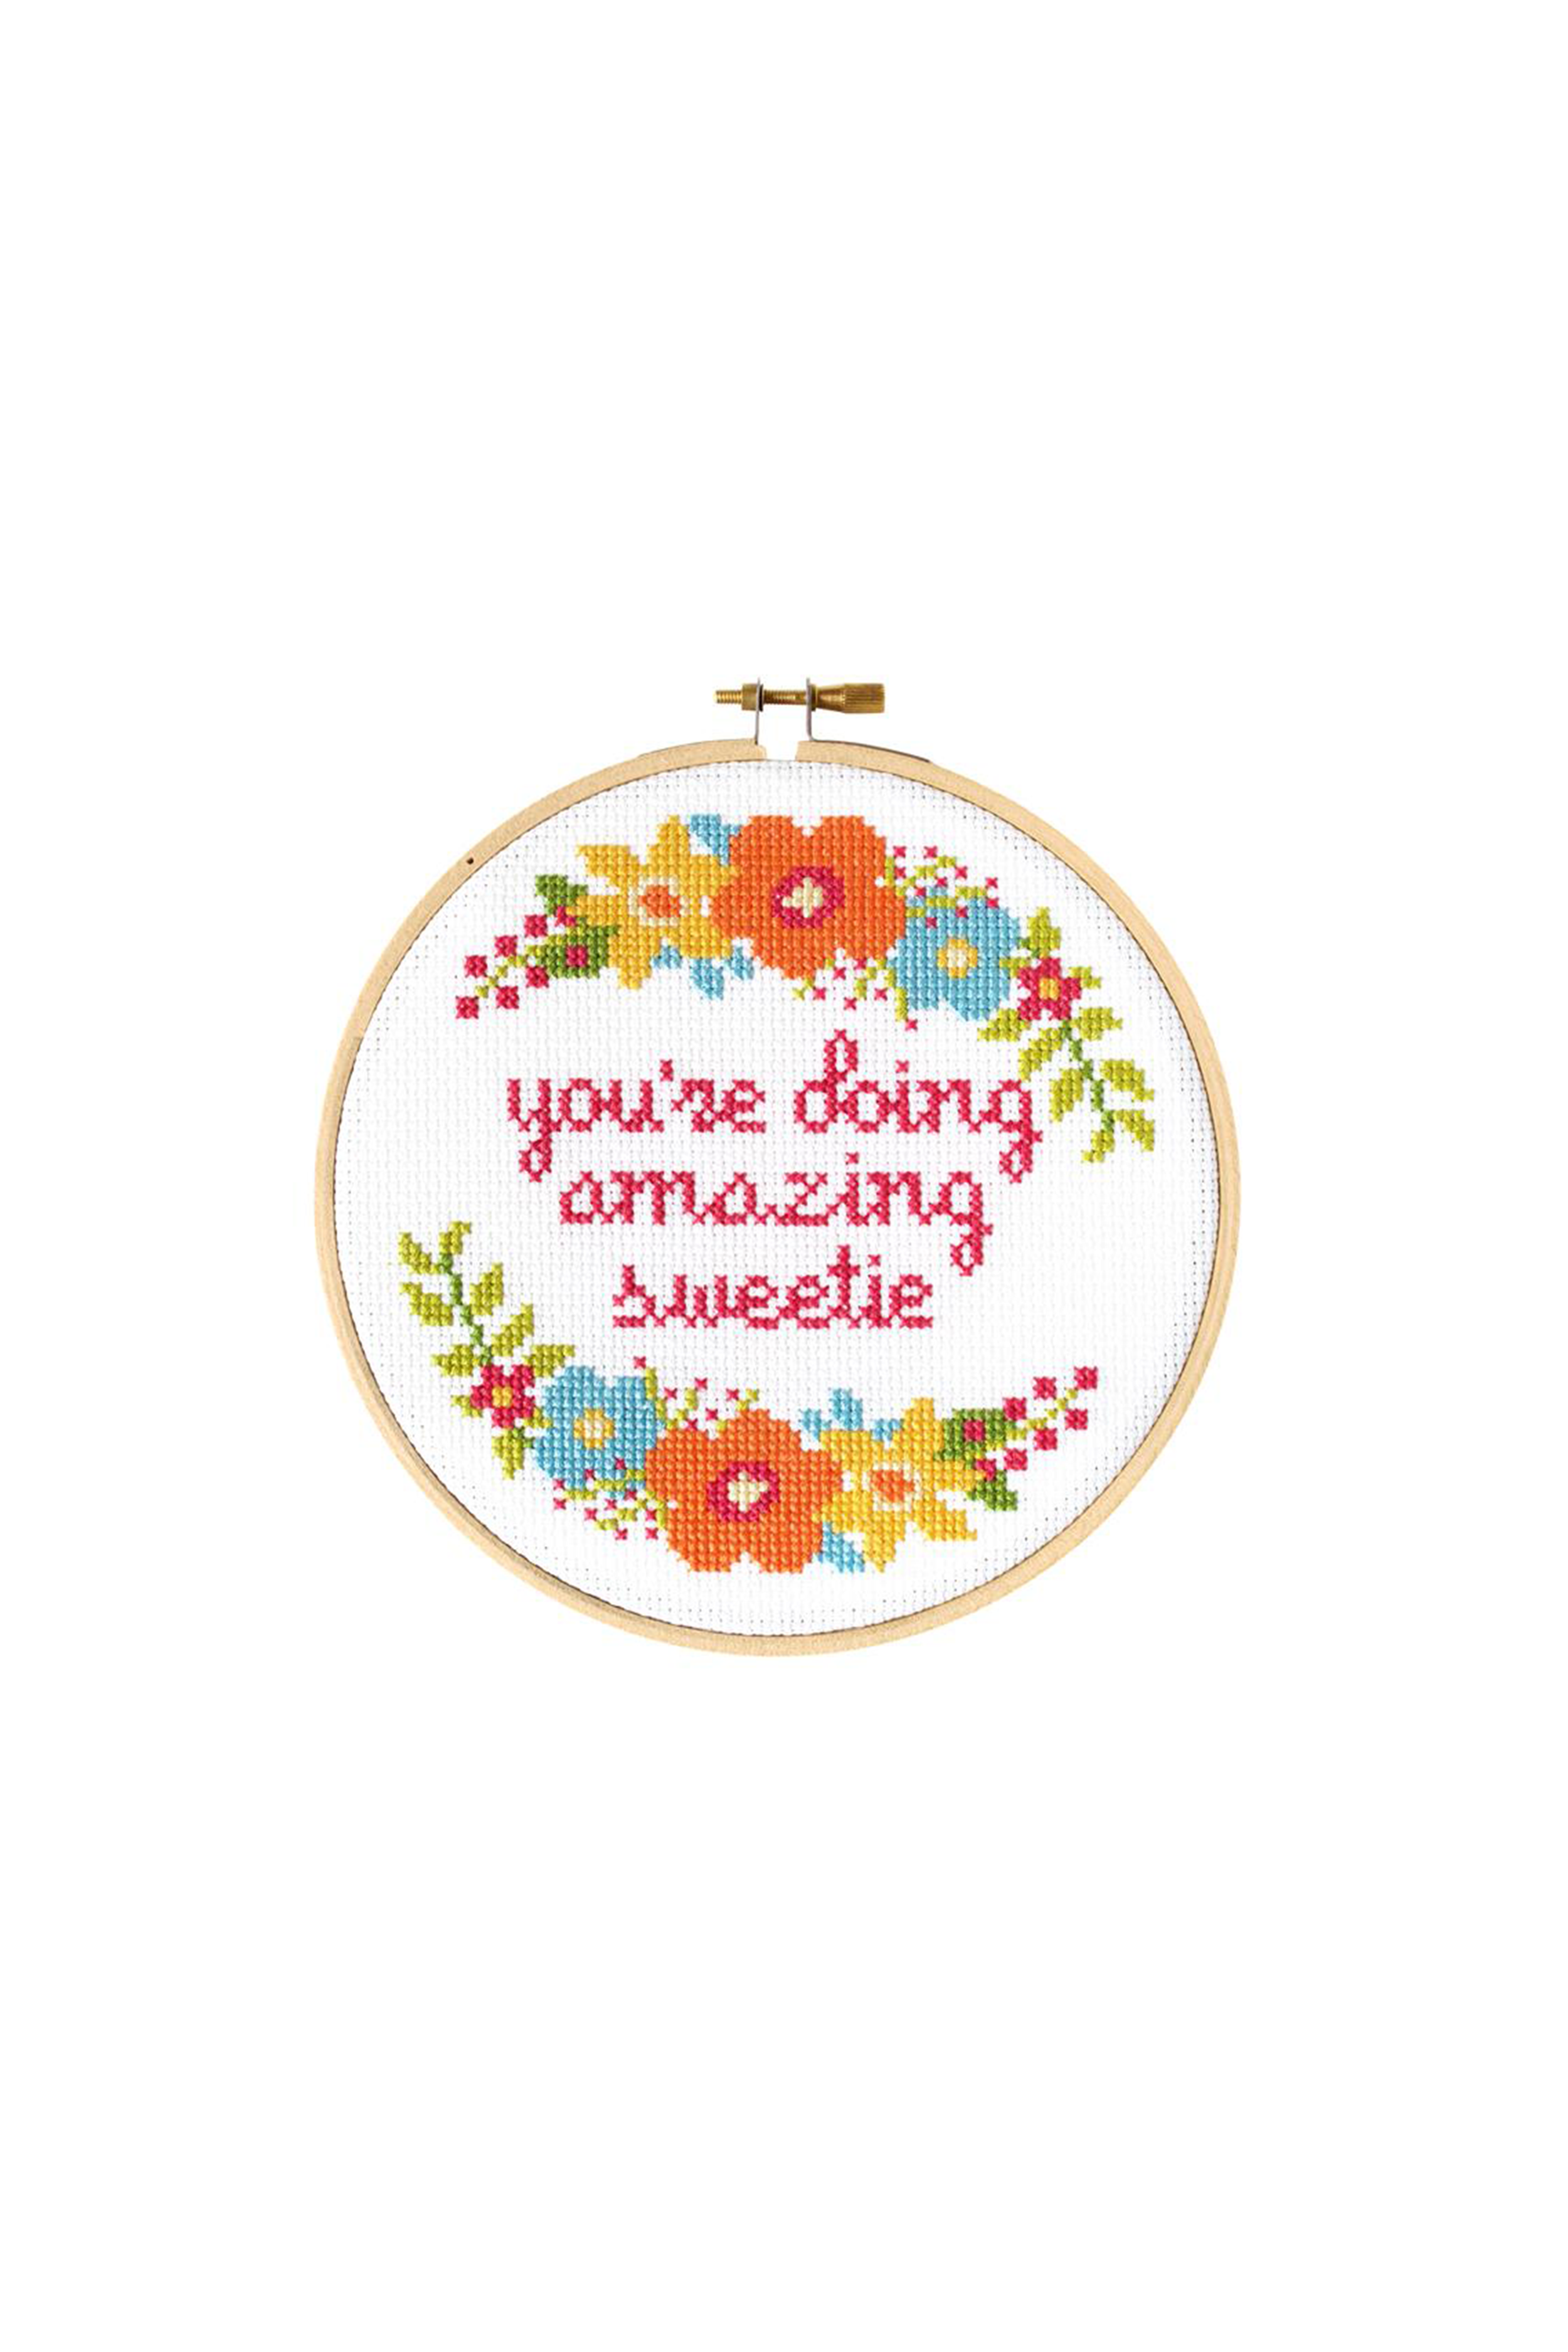 You're Doing Amazing Sweetie DIY Cross Stitch Kit